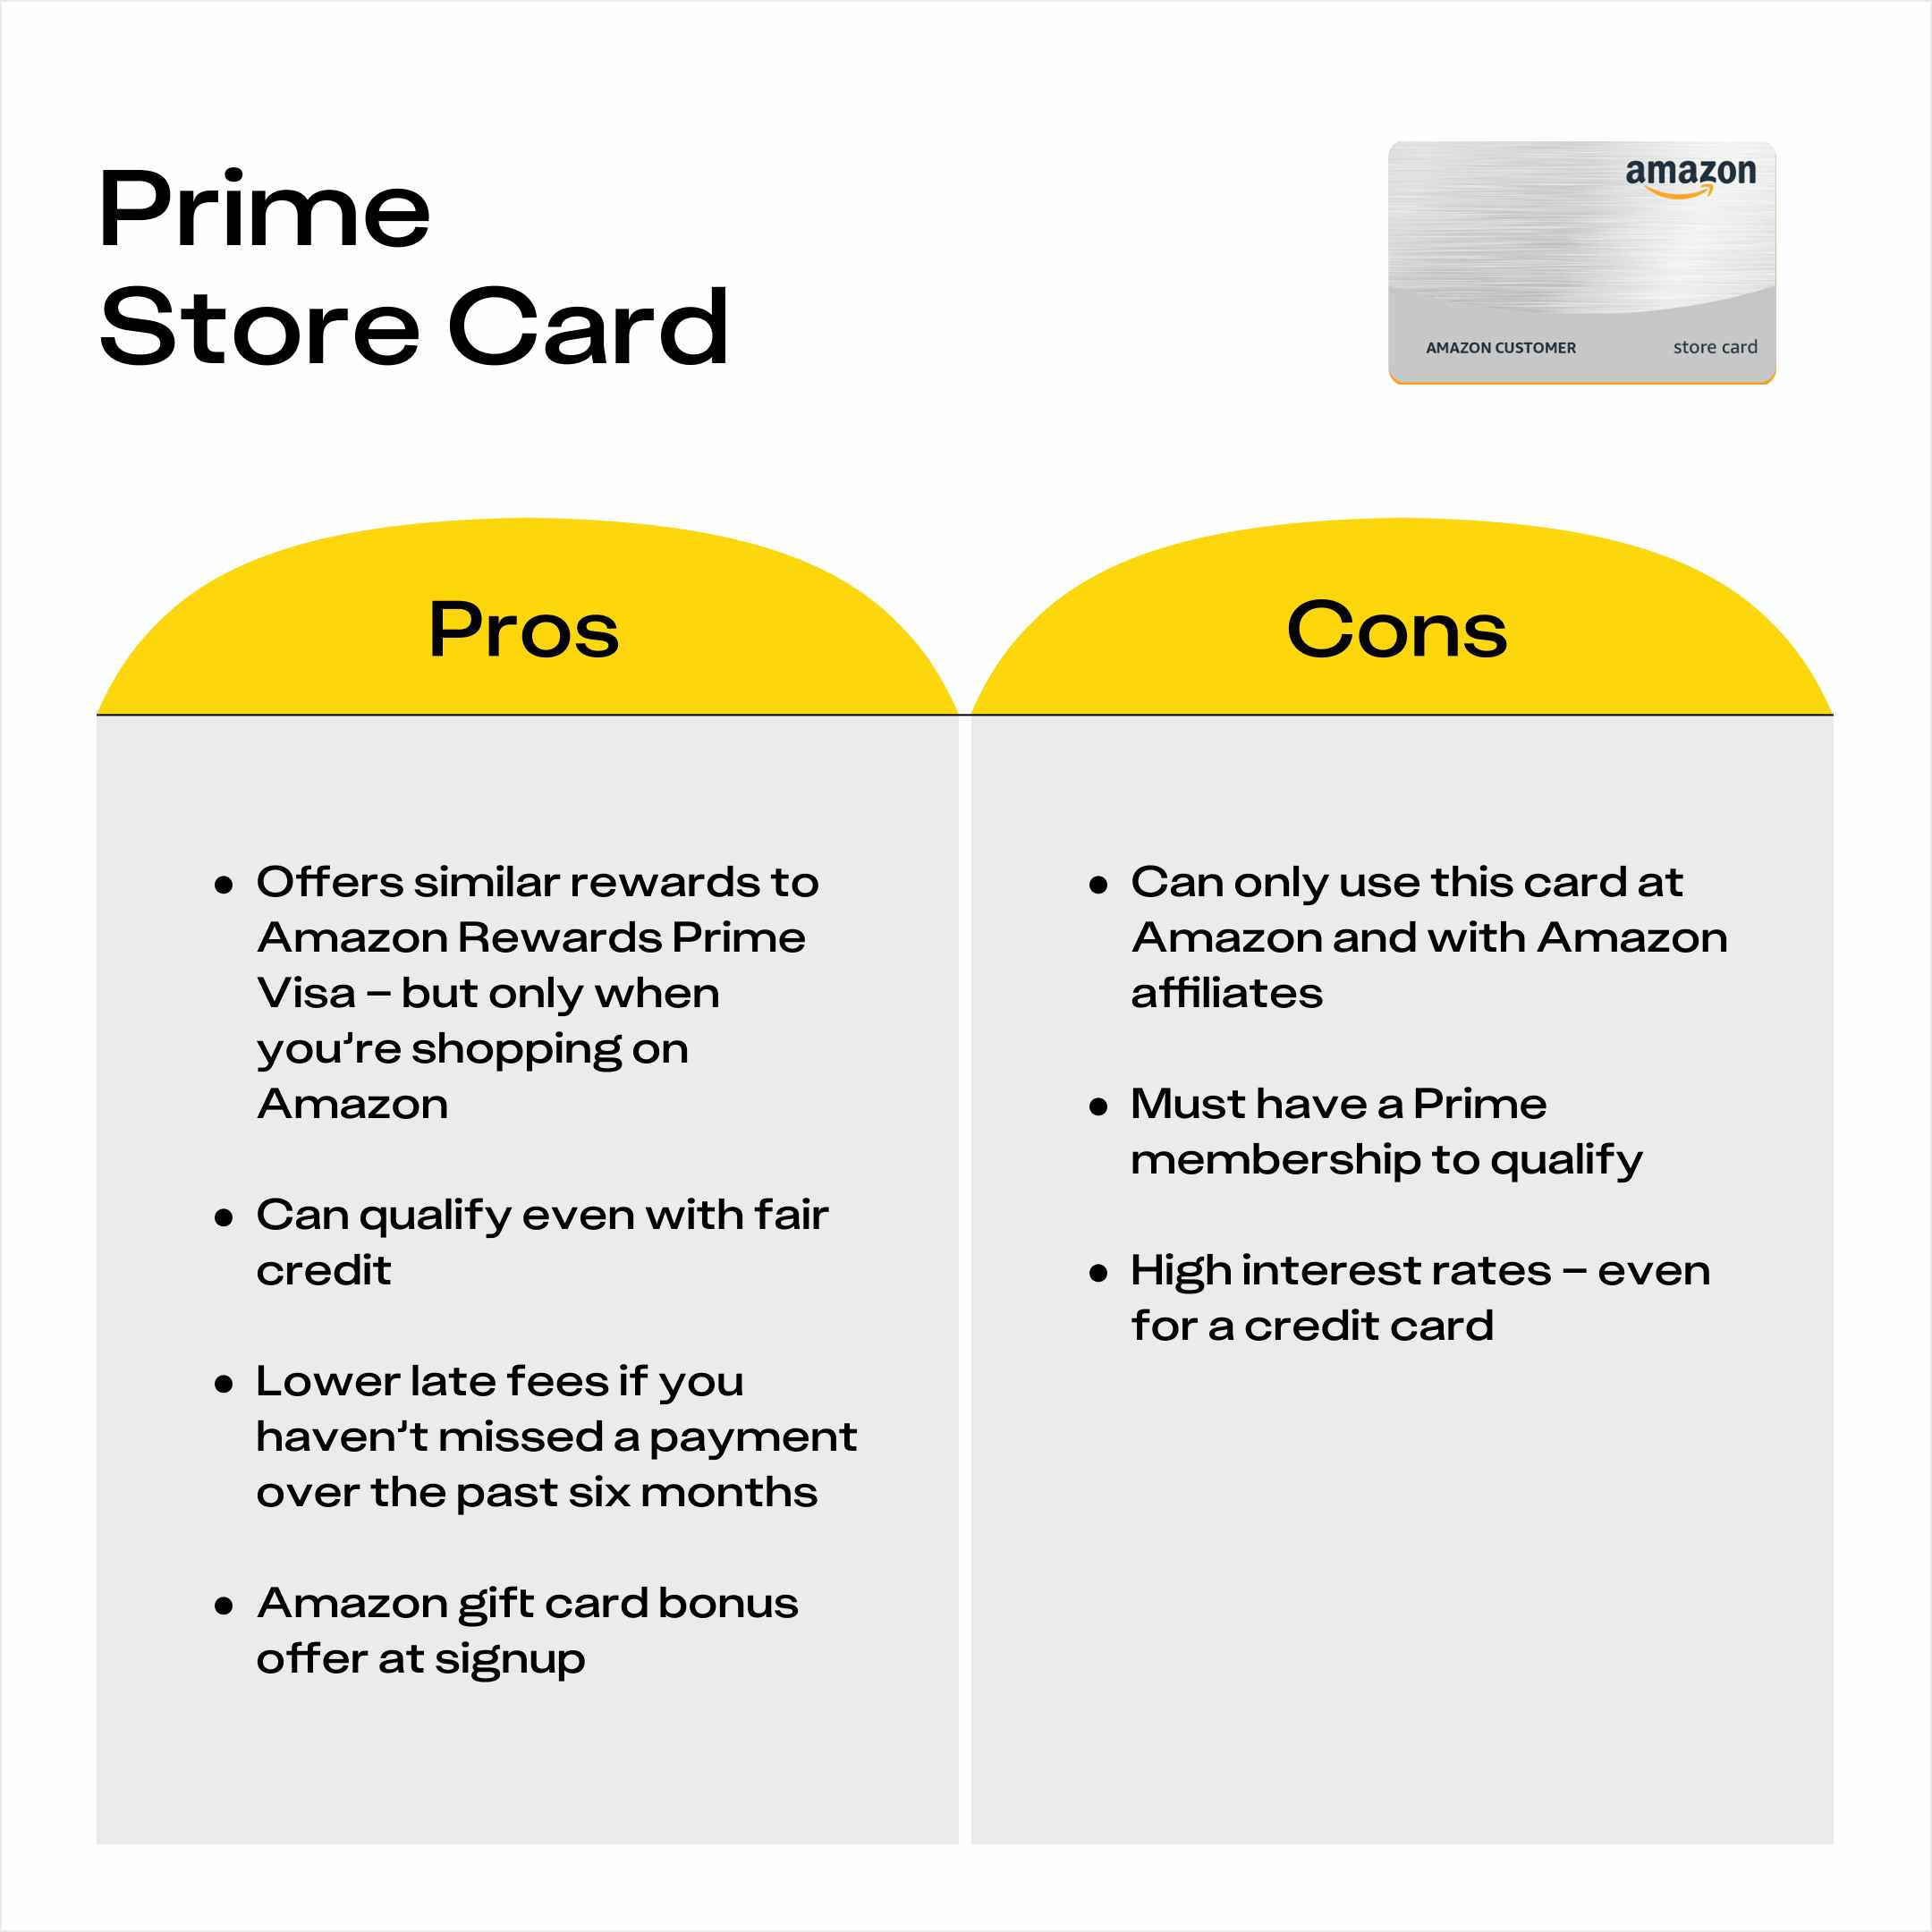 Prime Store Card